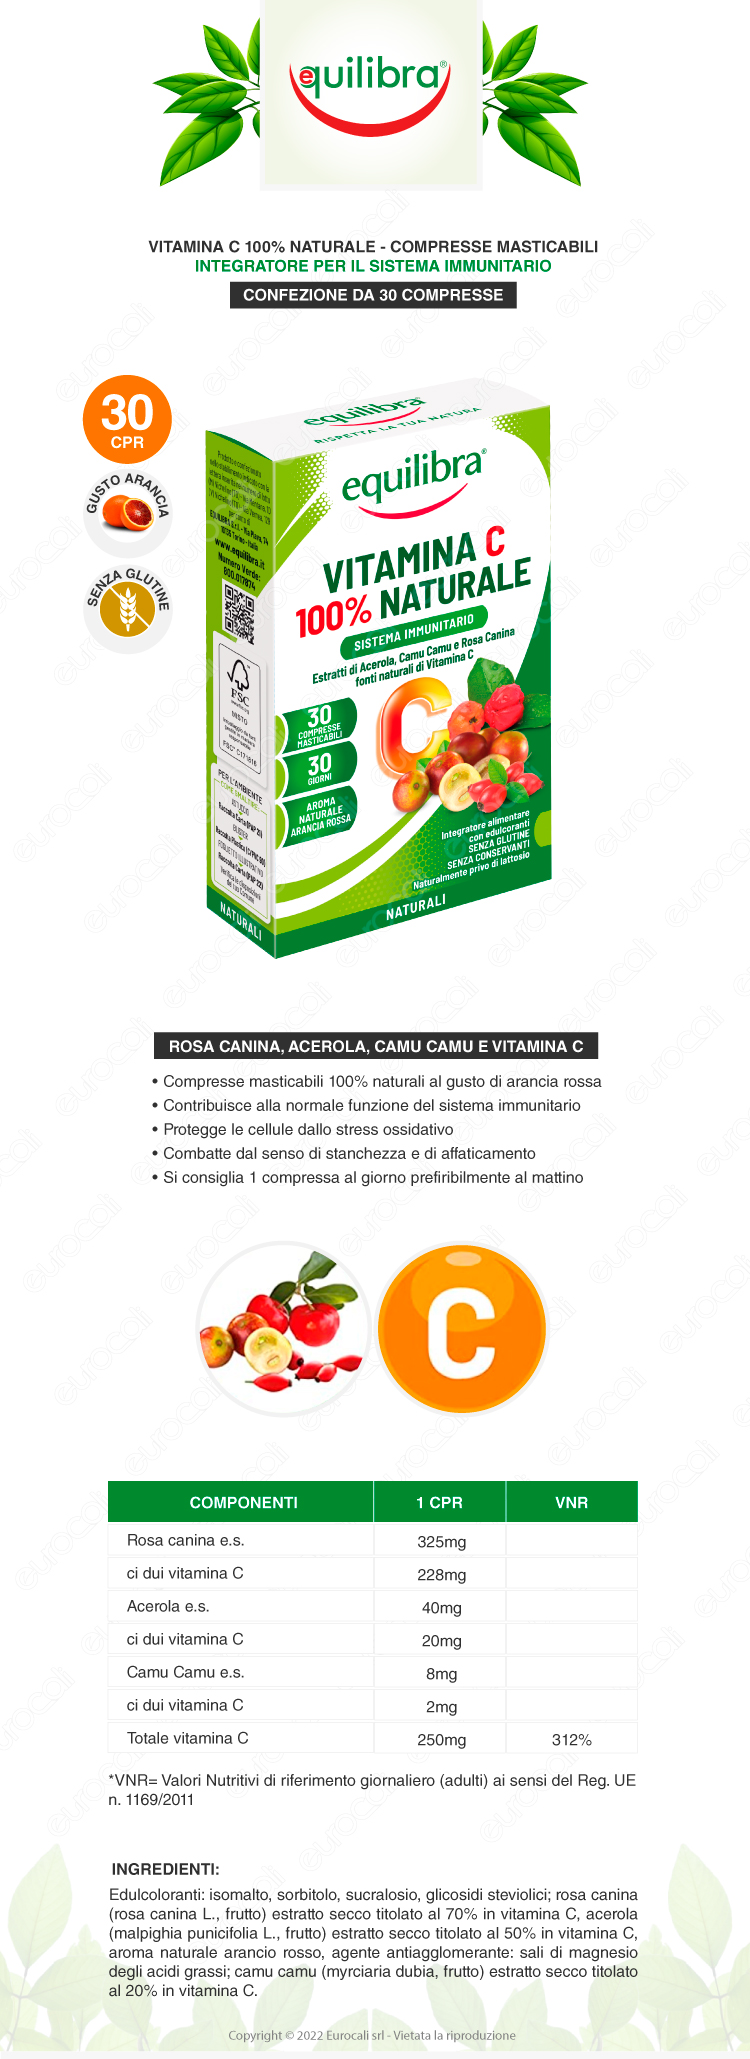 equilibra vitamina c 100% naturale integratore alimentare sistema immunitario gusto arancia gluten free senza lattosio 30